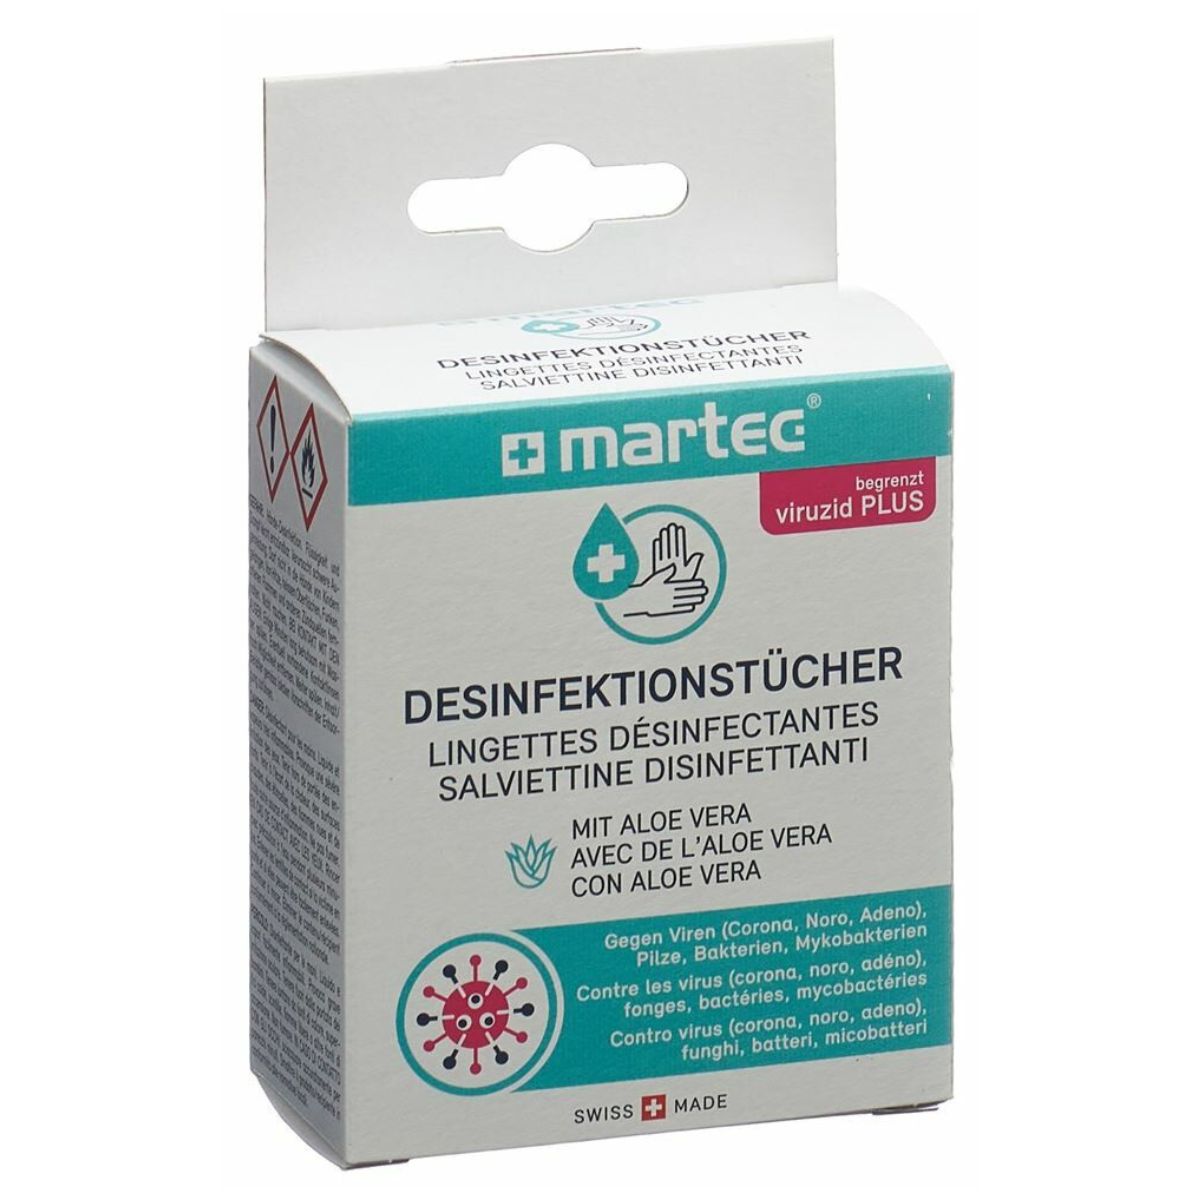 MARTEC Desinfektionstücher mit Aloe vera 10 Stück